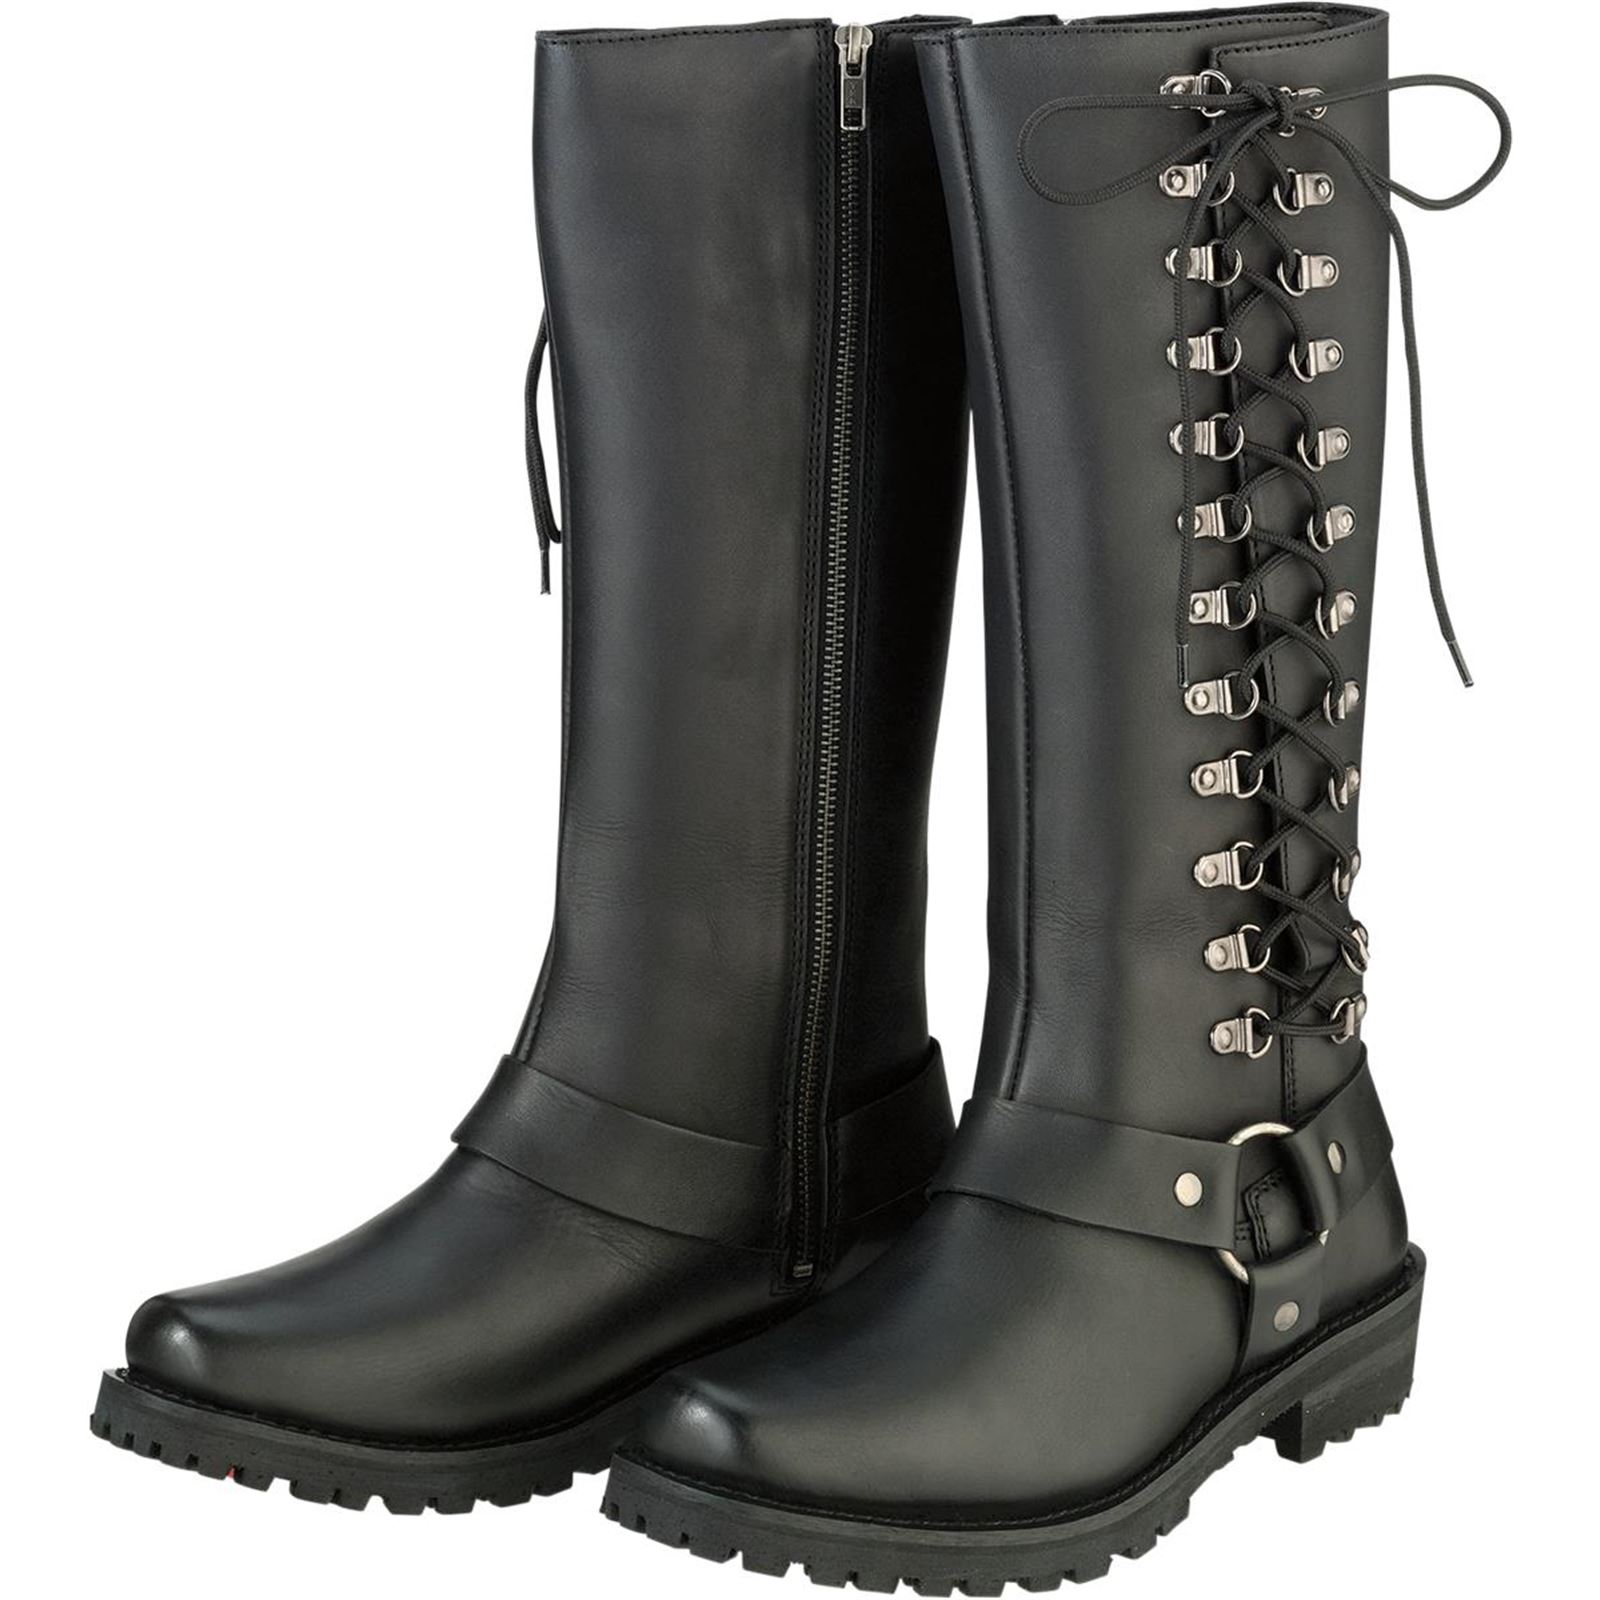 Z1R Women's Savage Boots - Black - Size 9